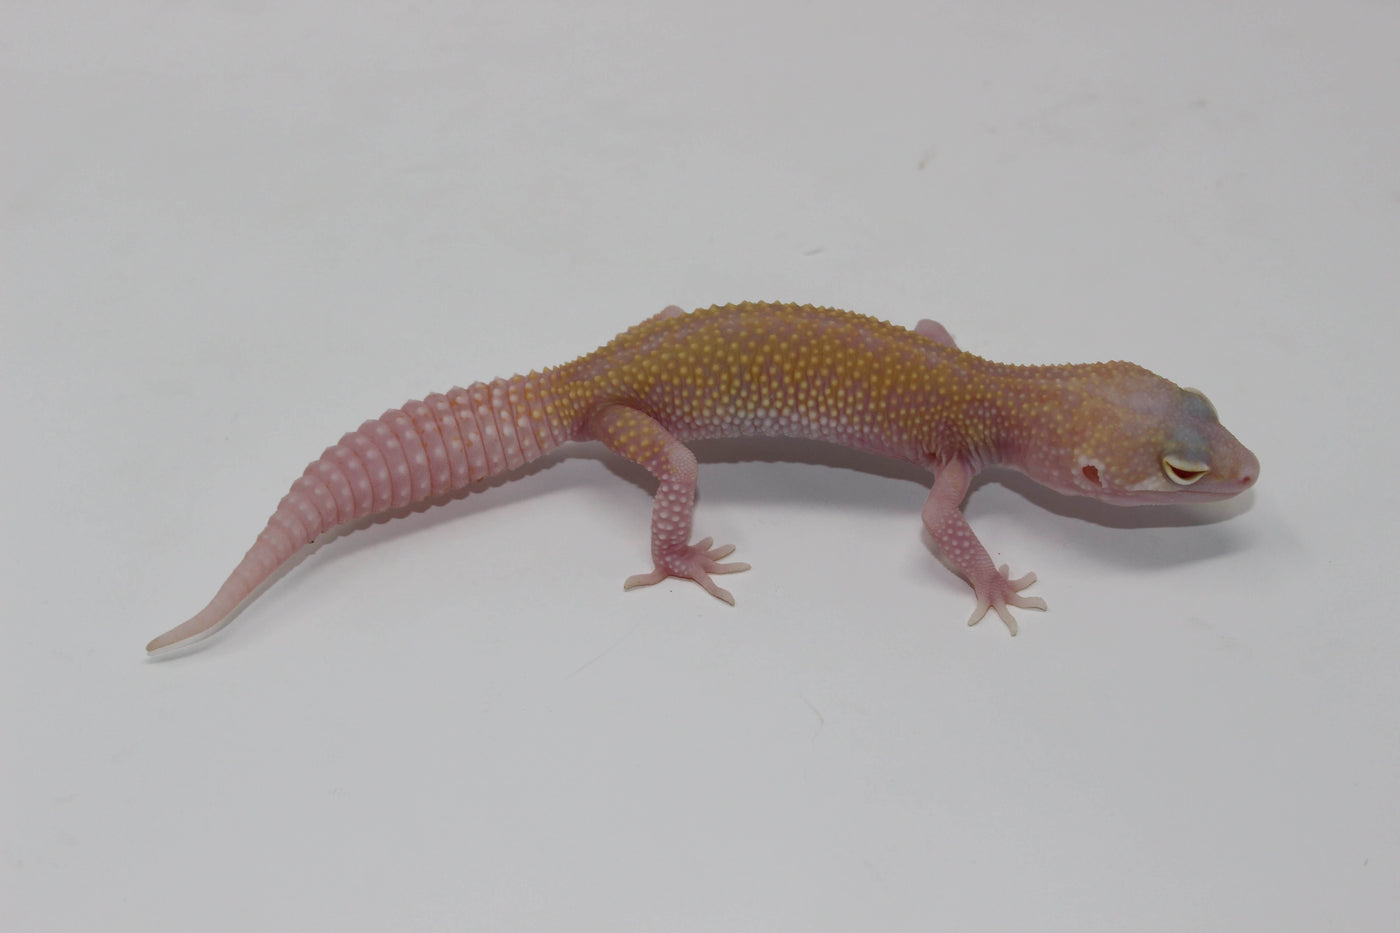 raptor solid red eyes leopard gecko for sale, buy reptiles online